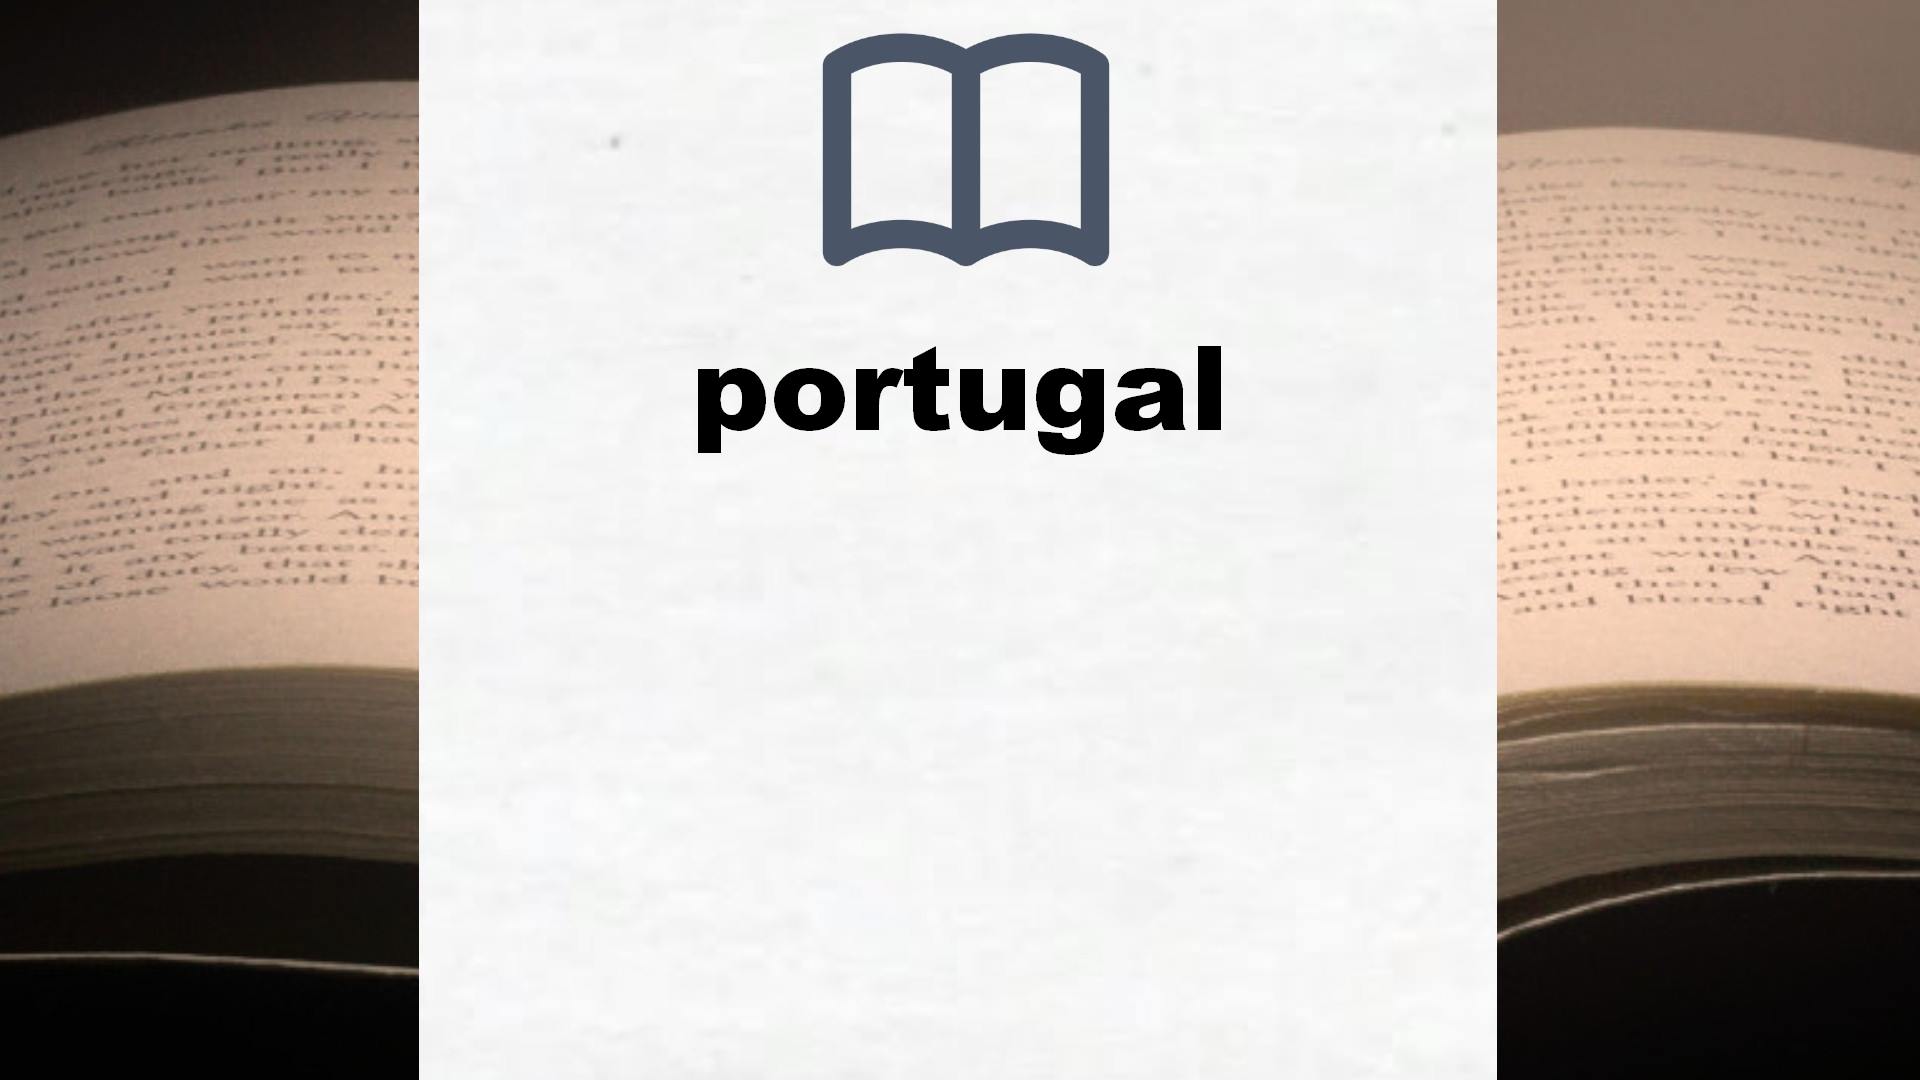 Libros sobre portugal